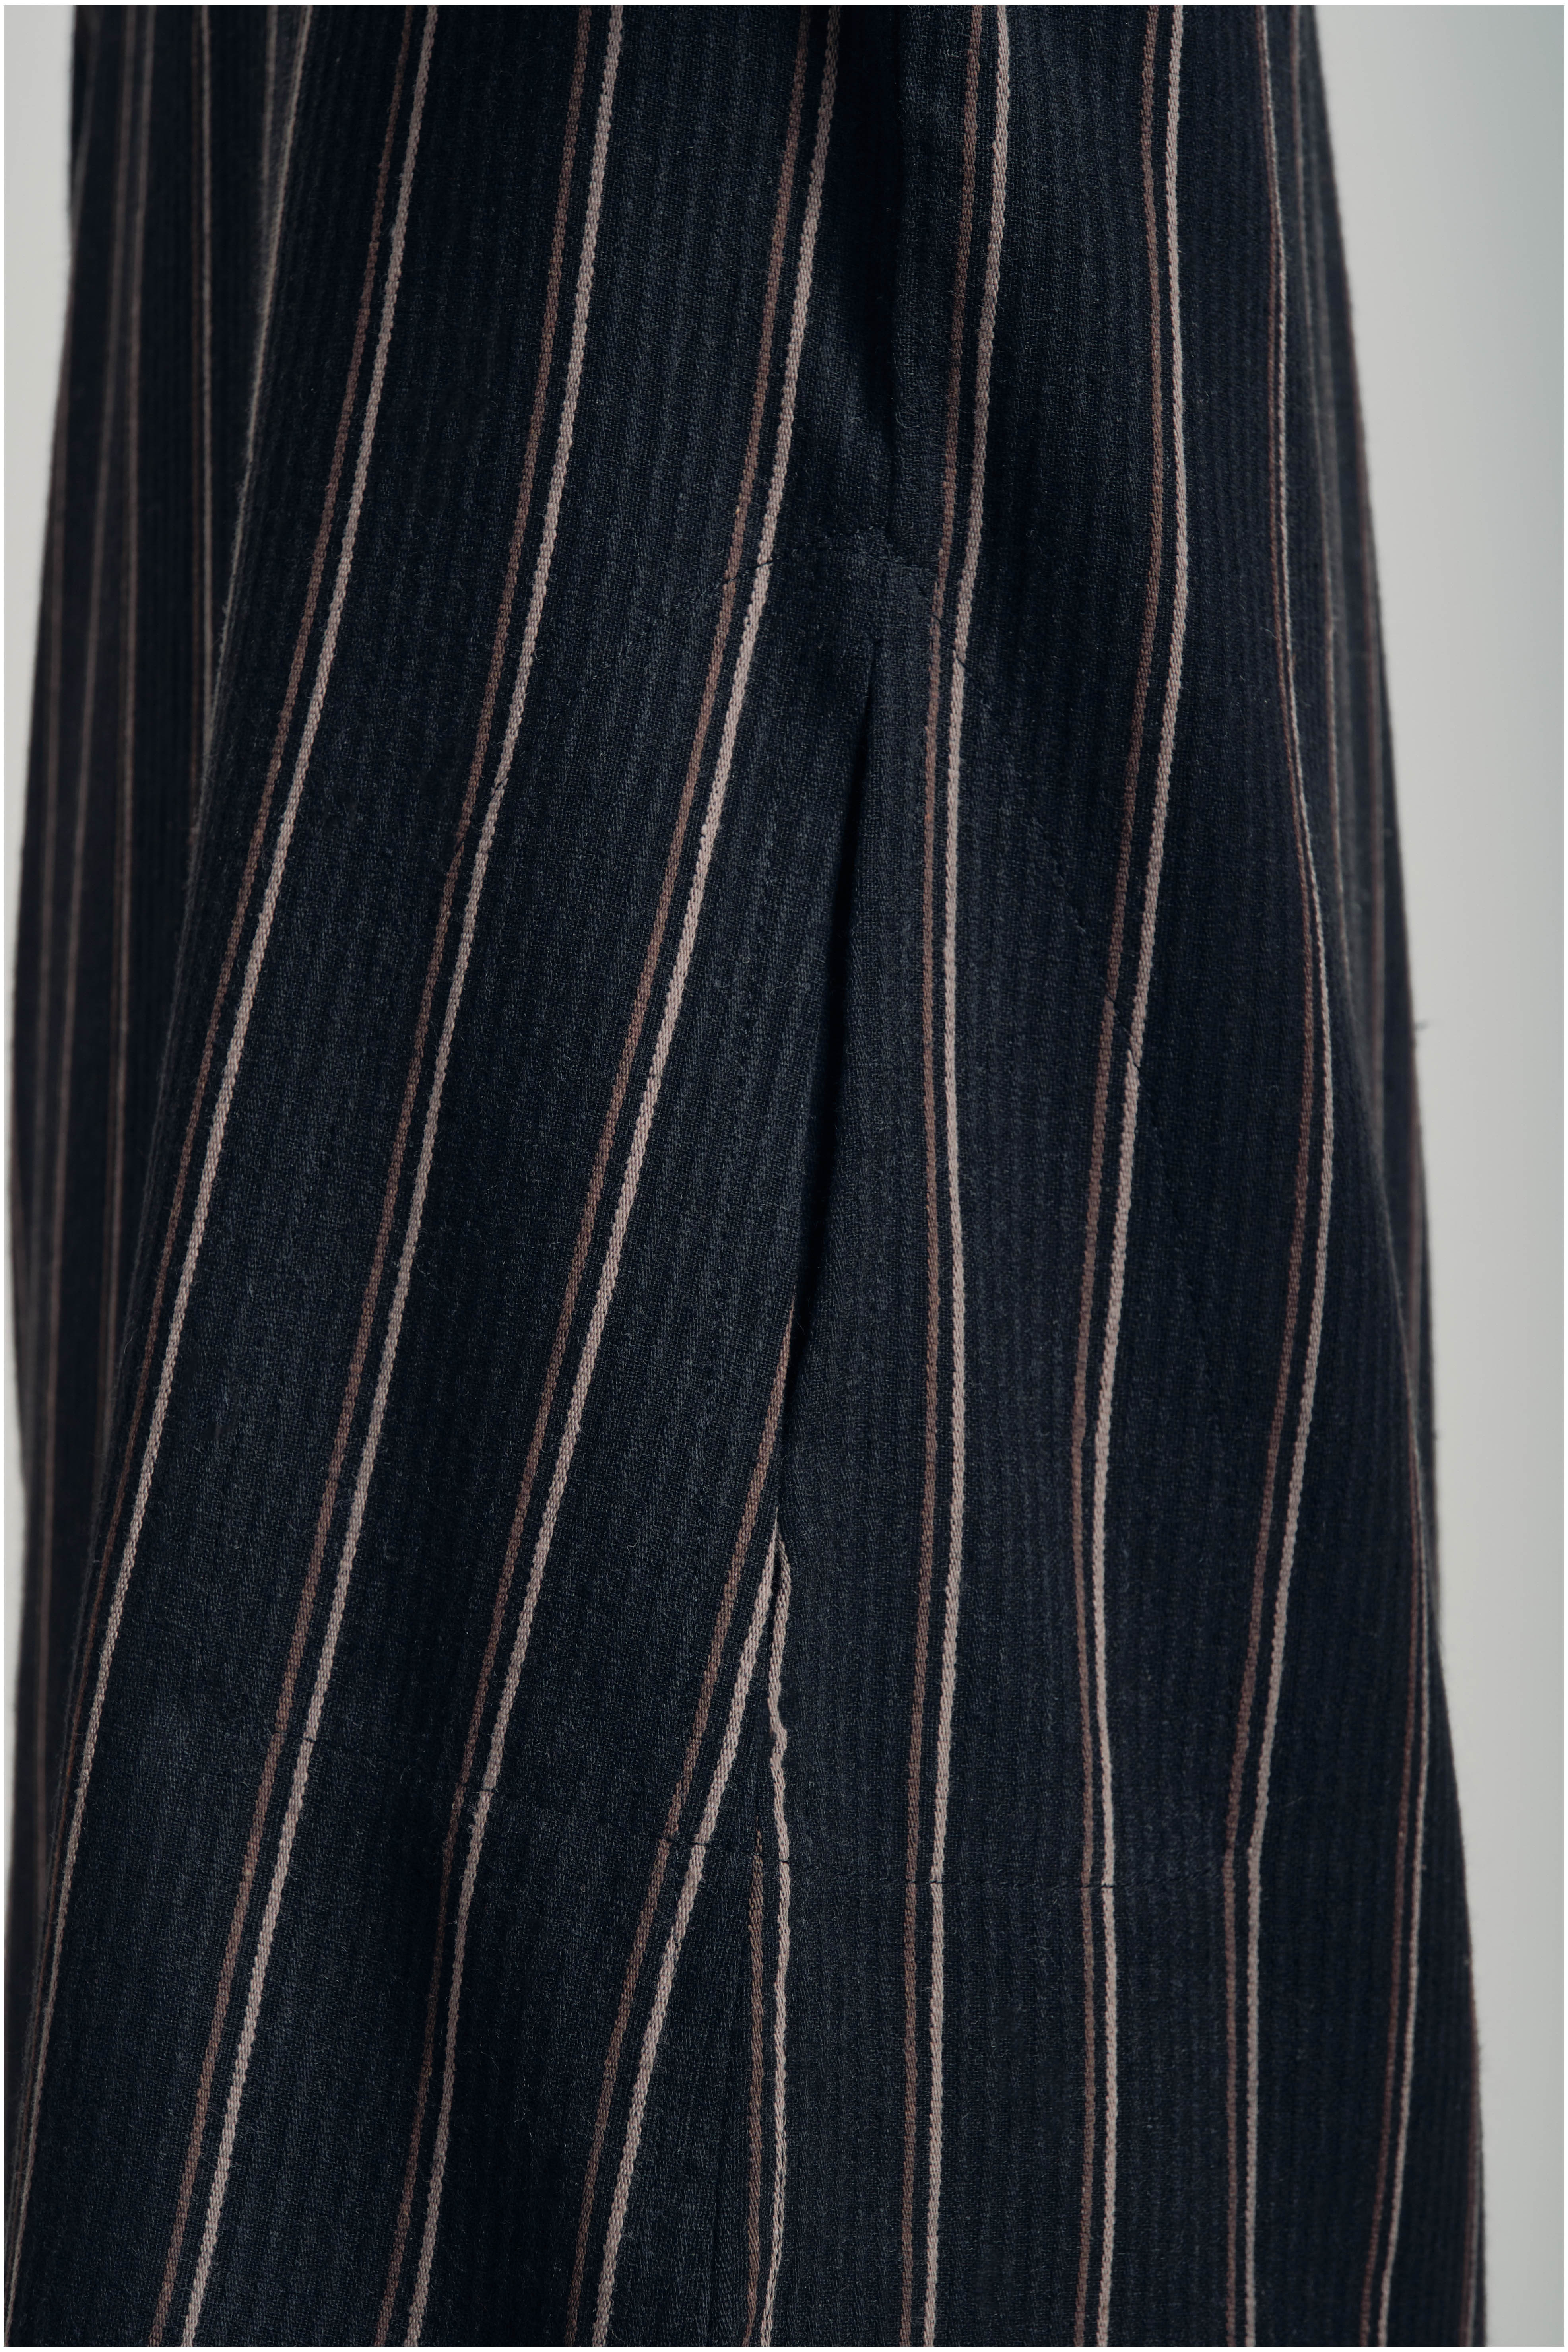 Mansoor Three Quarter Sleeve Top - Black Brown Stripe